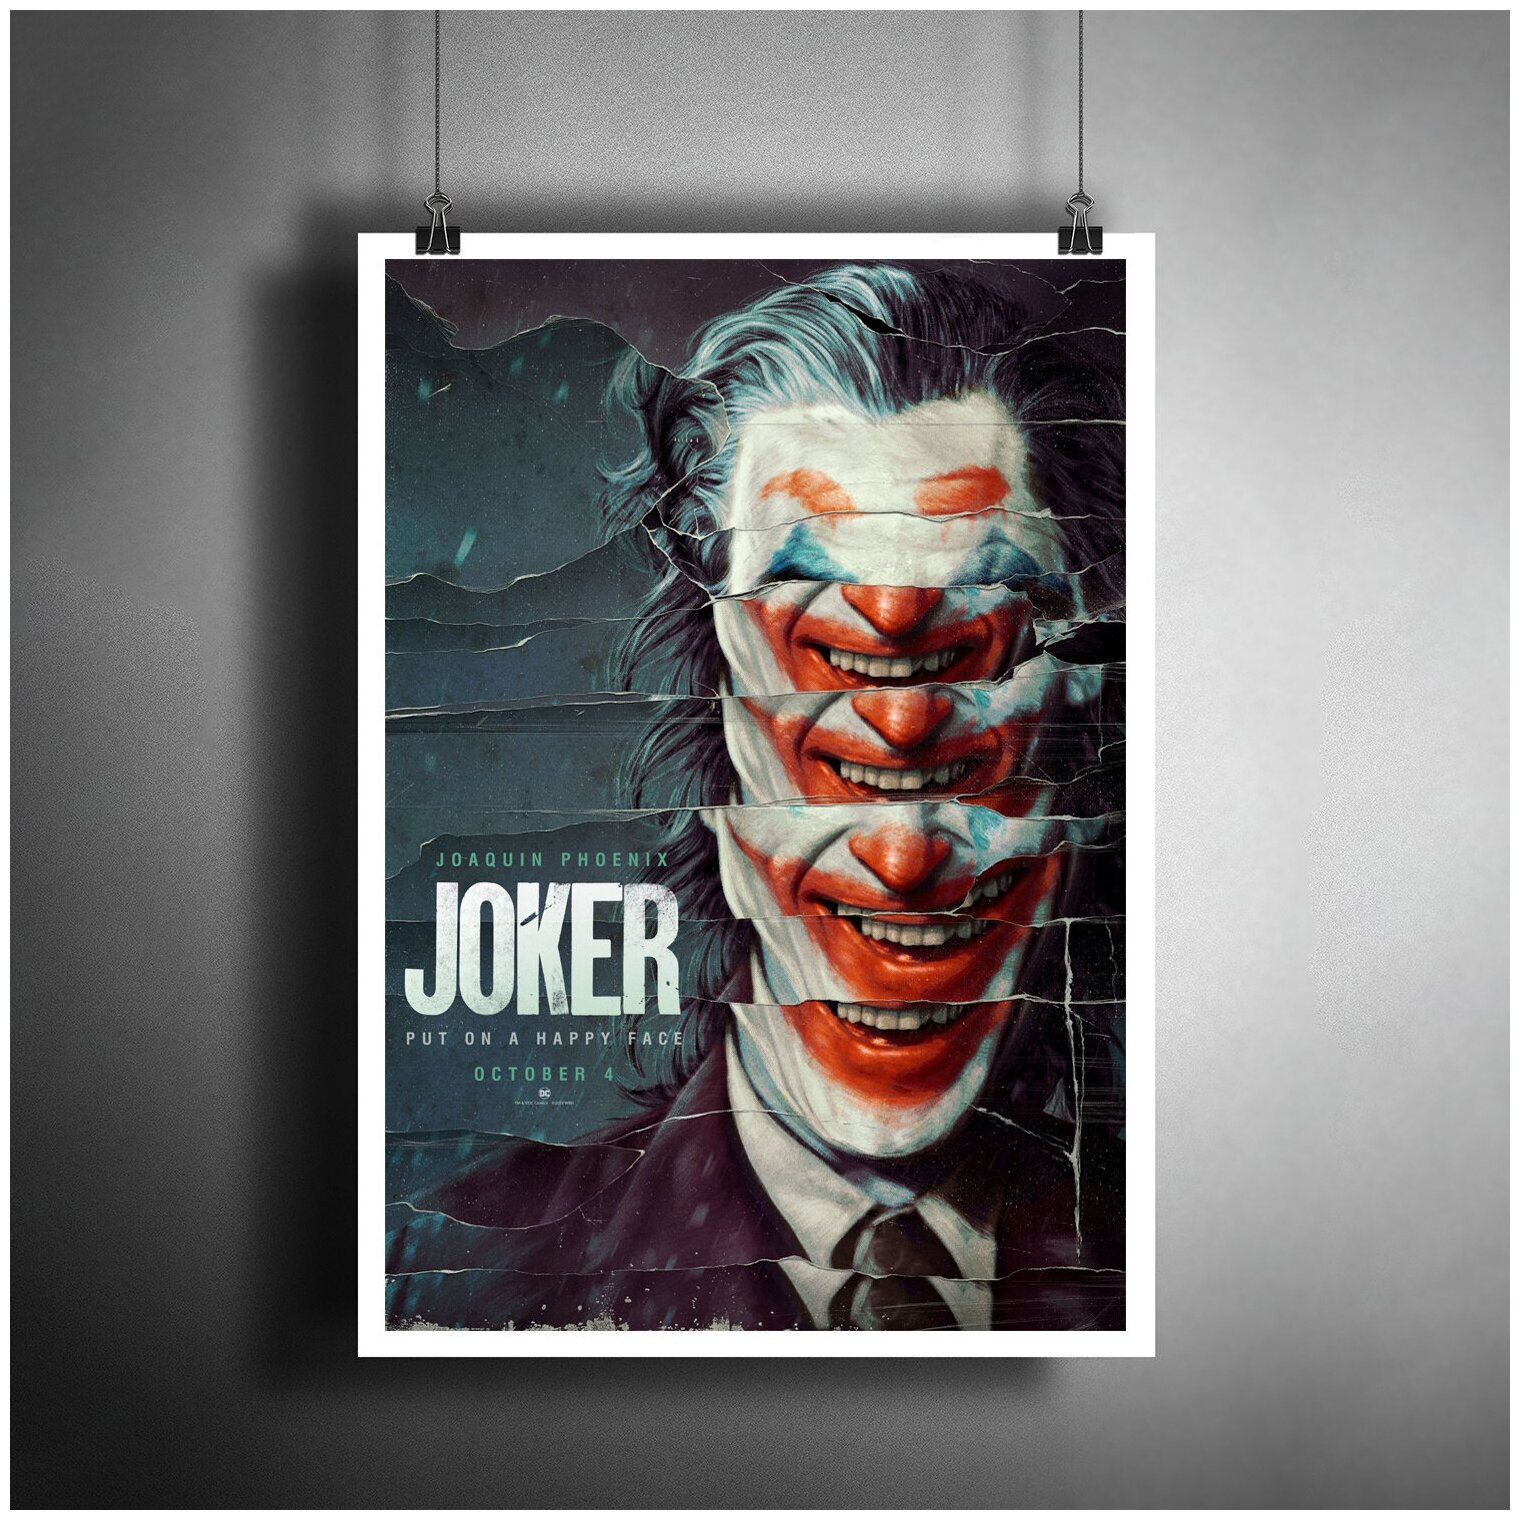 Постер плакат для интерьера "Фильм: Джокер. Хоакин Феникс. Joker"/ Декор дома, офиса, комнаты A3 (297 x 420 мм)